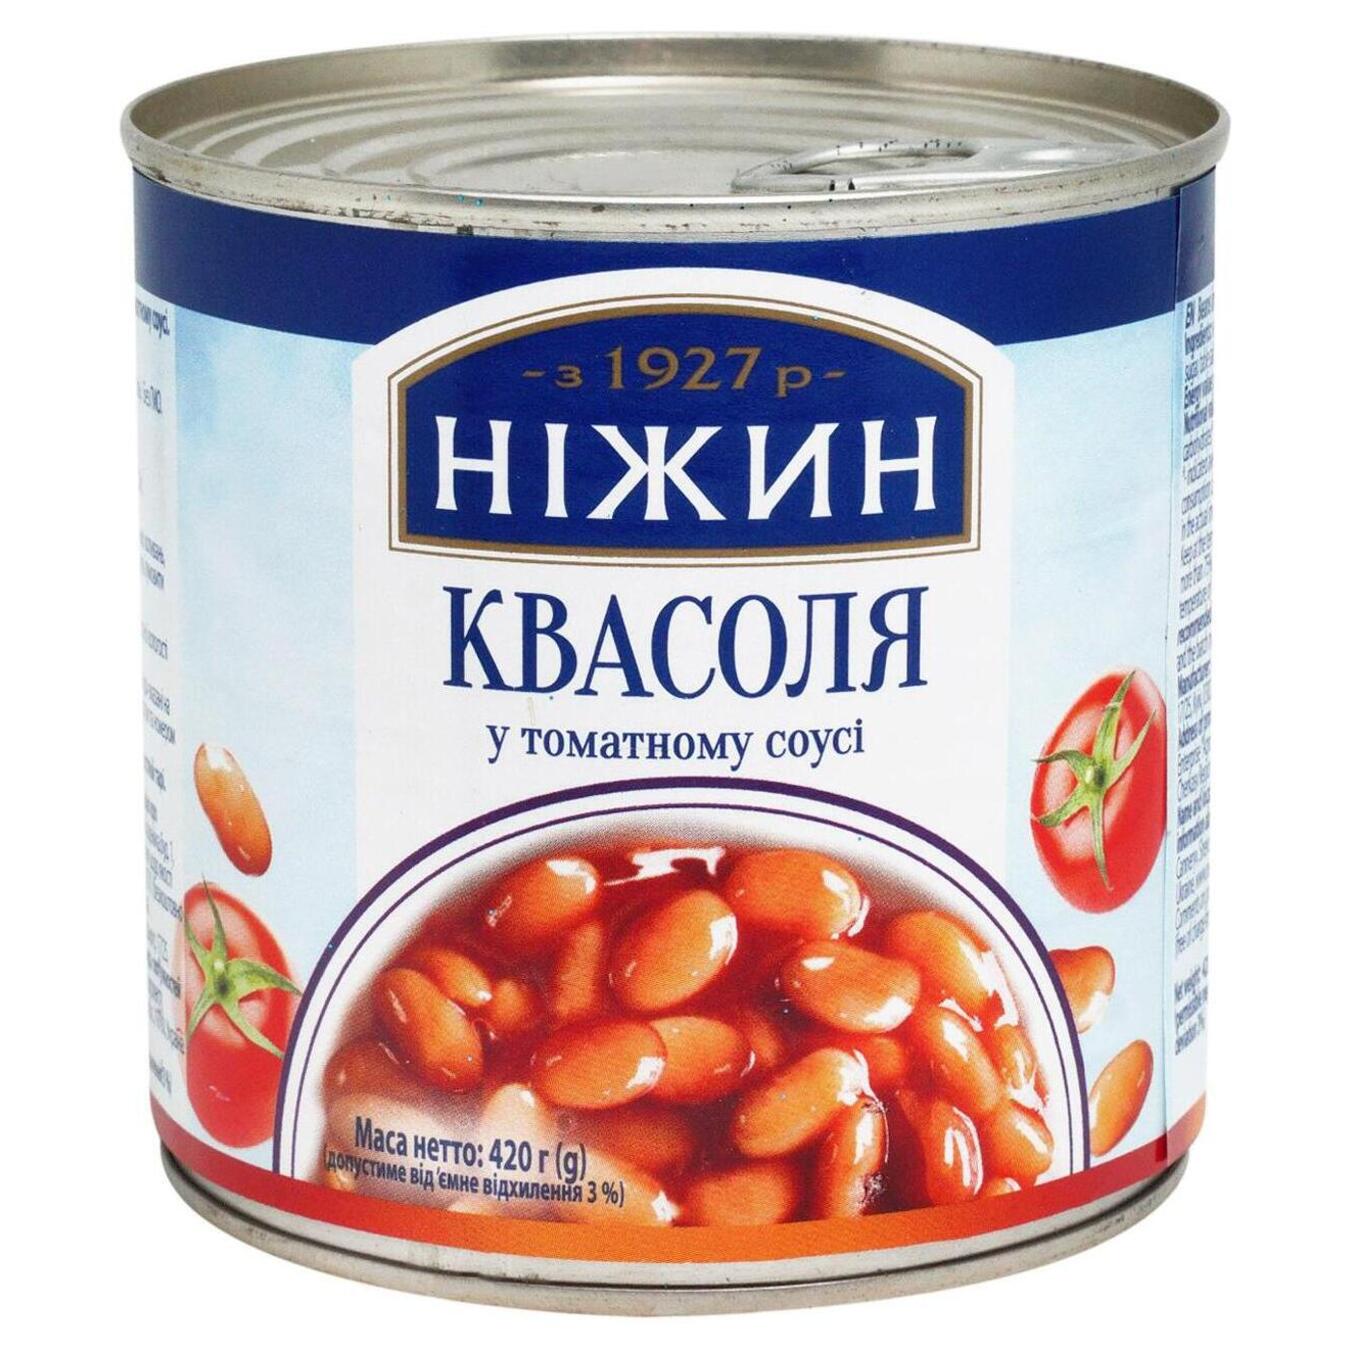 Nizhin beans in tomato sauce 420g